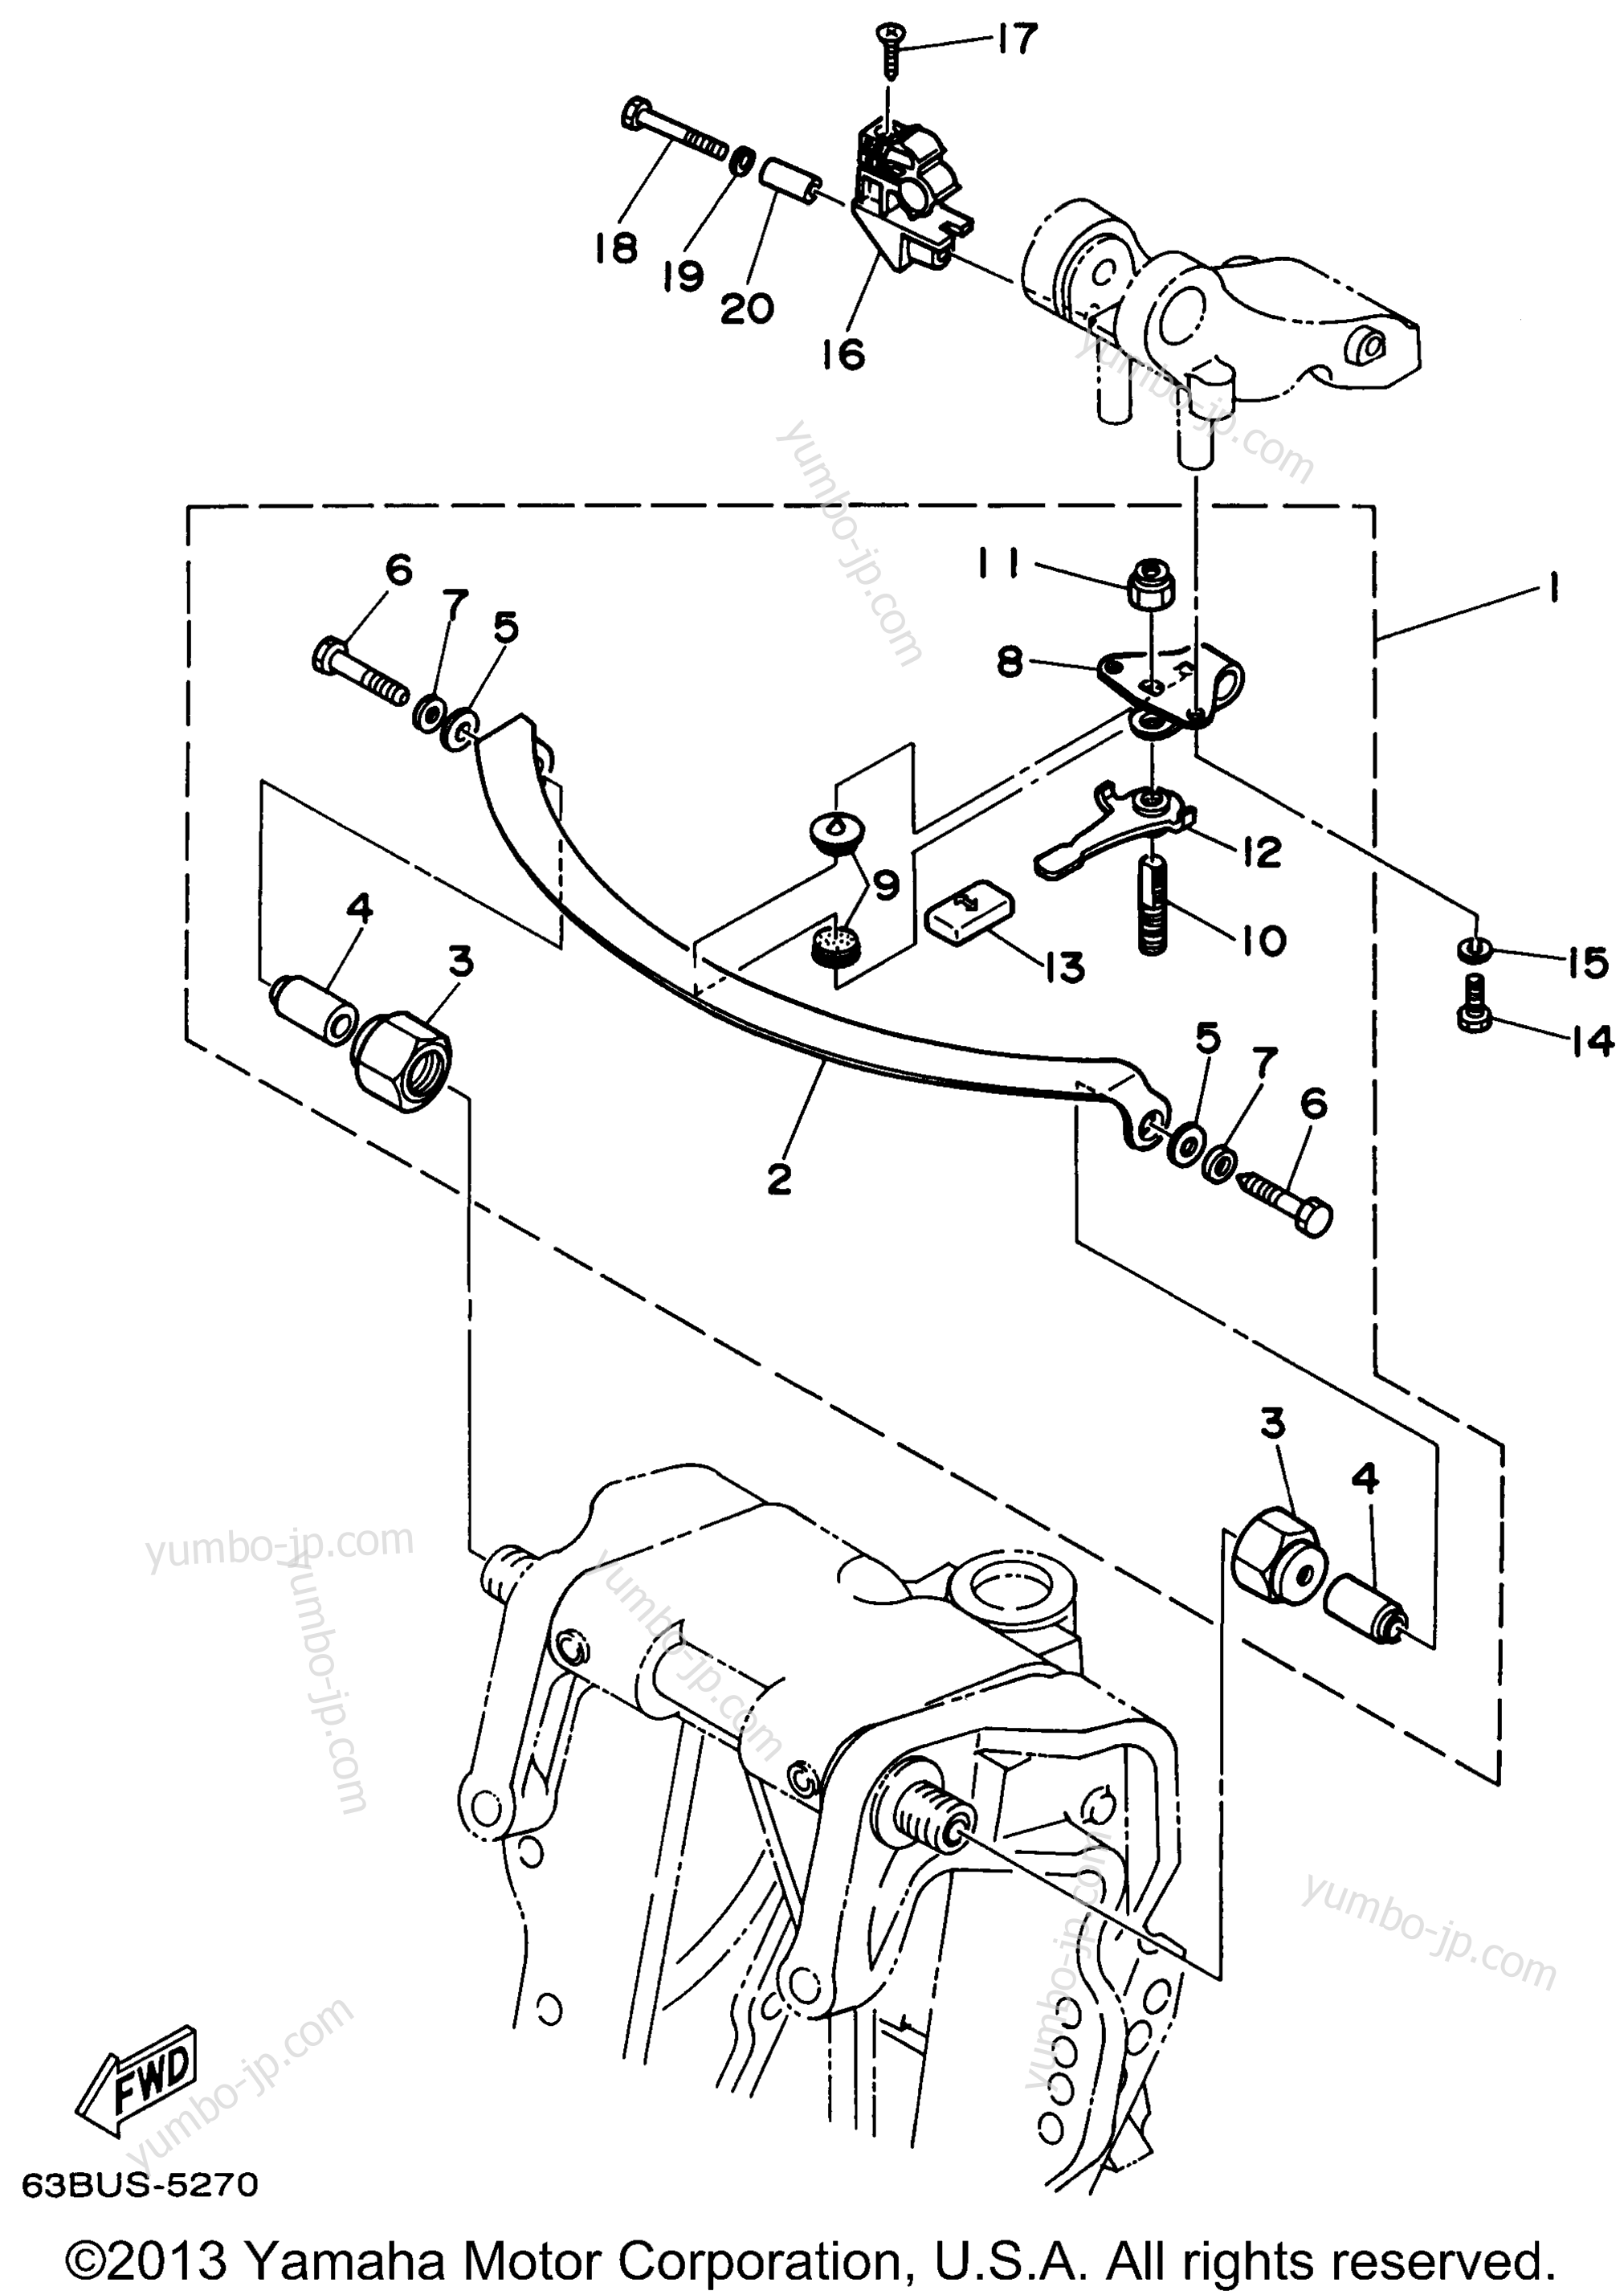 Alternate 2 Steering Friction для лодочных моторов YAMAHA P40EJRW_THLW (40MSHW) 1998 г.